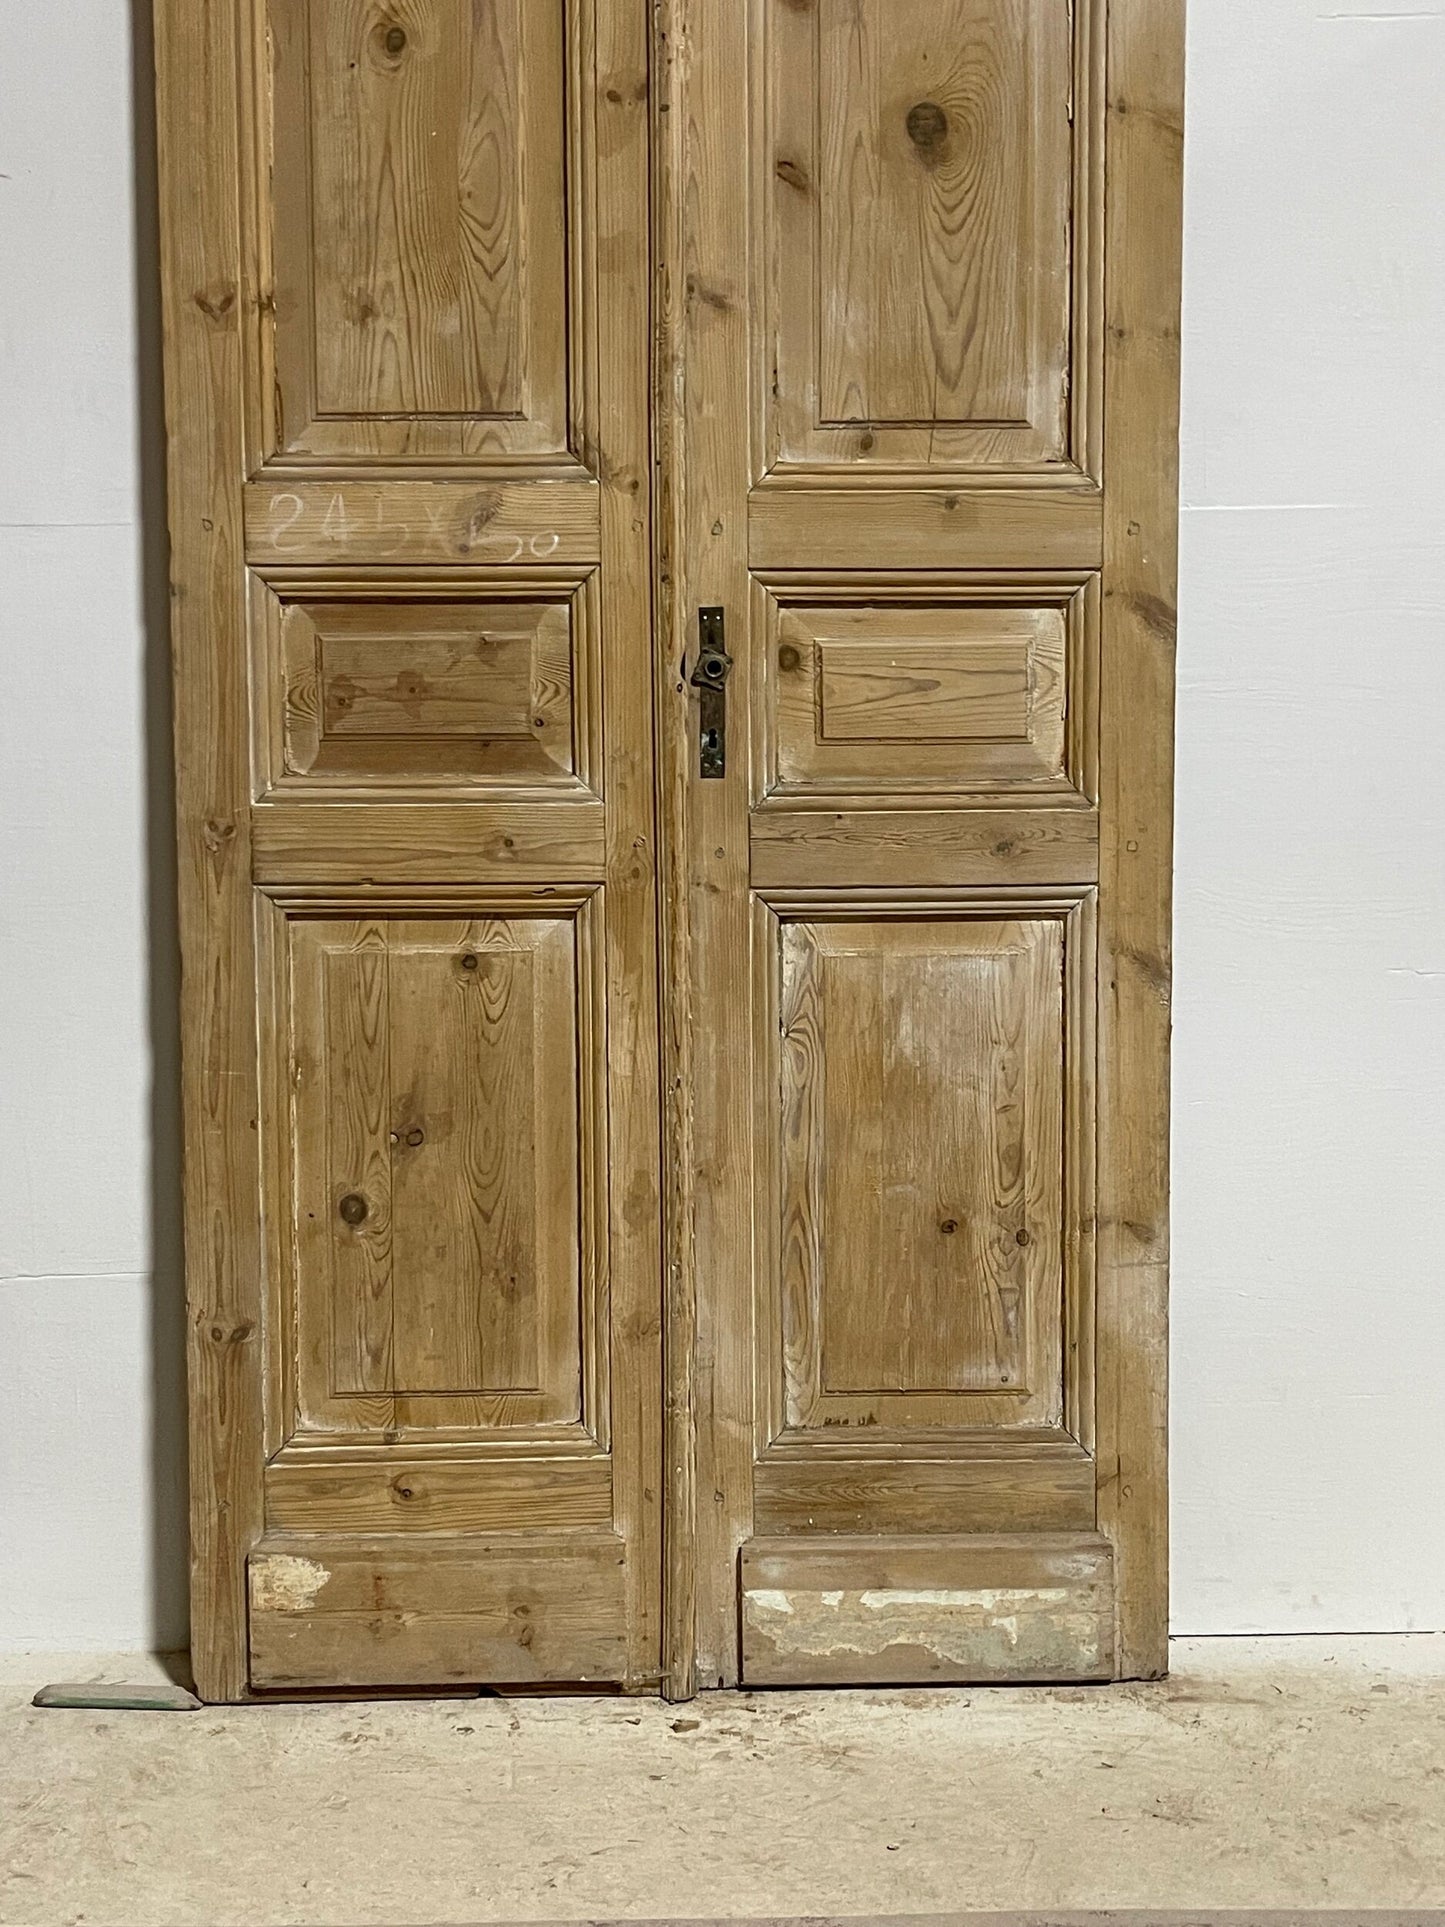 Antique French doors (96x40) H0145s